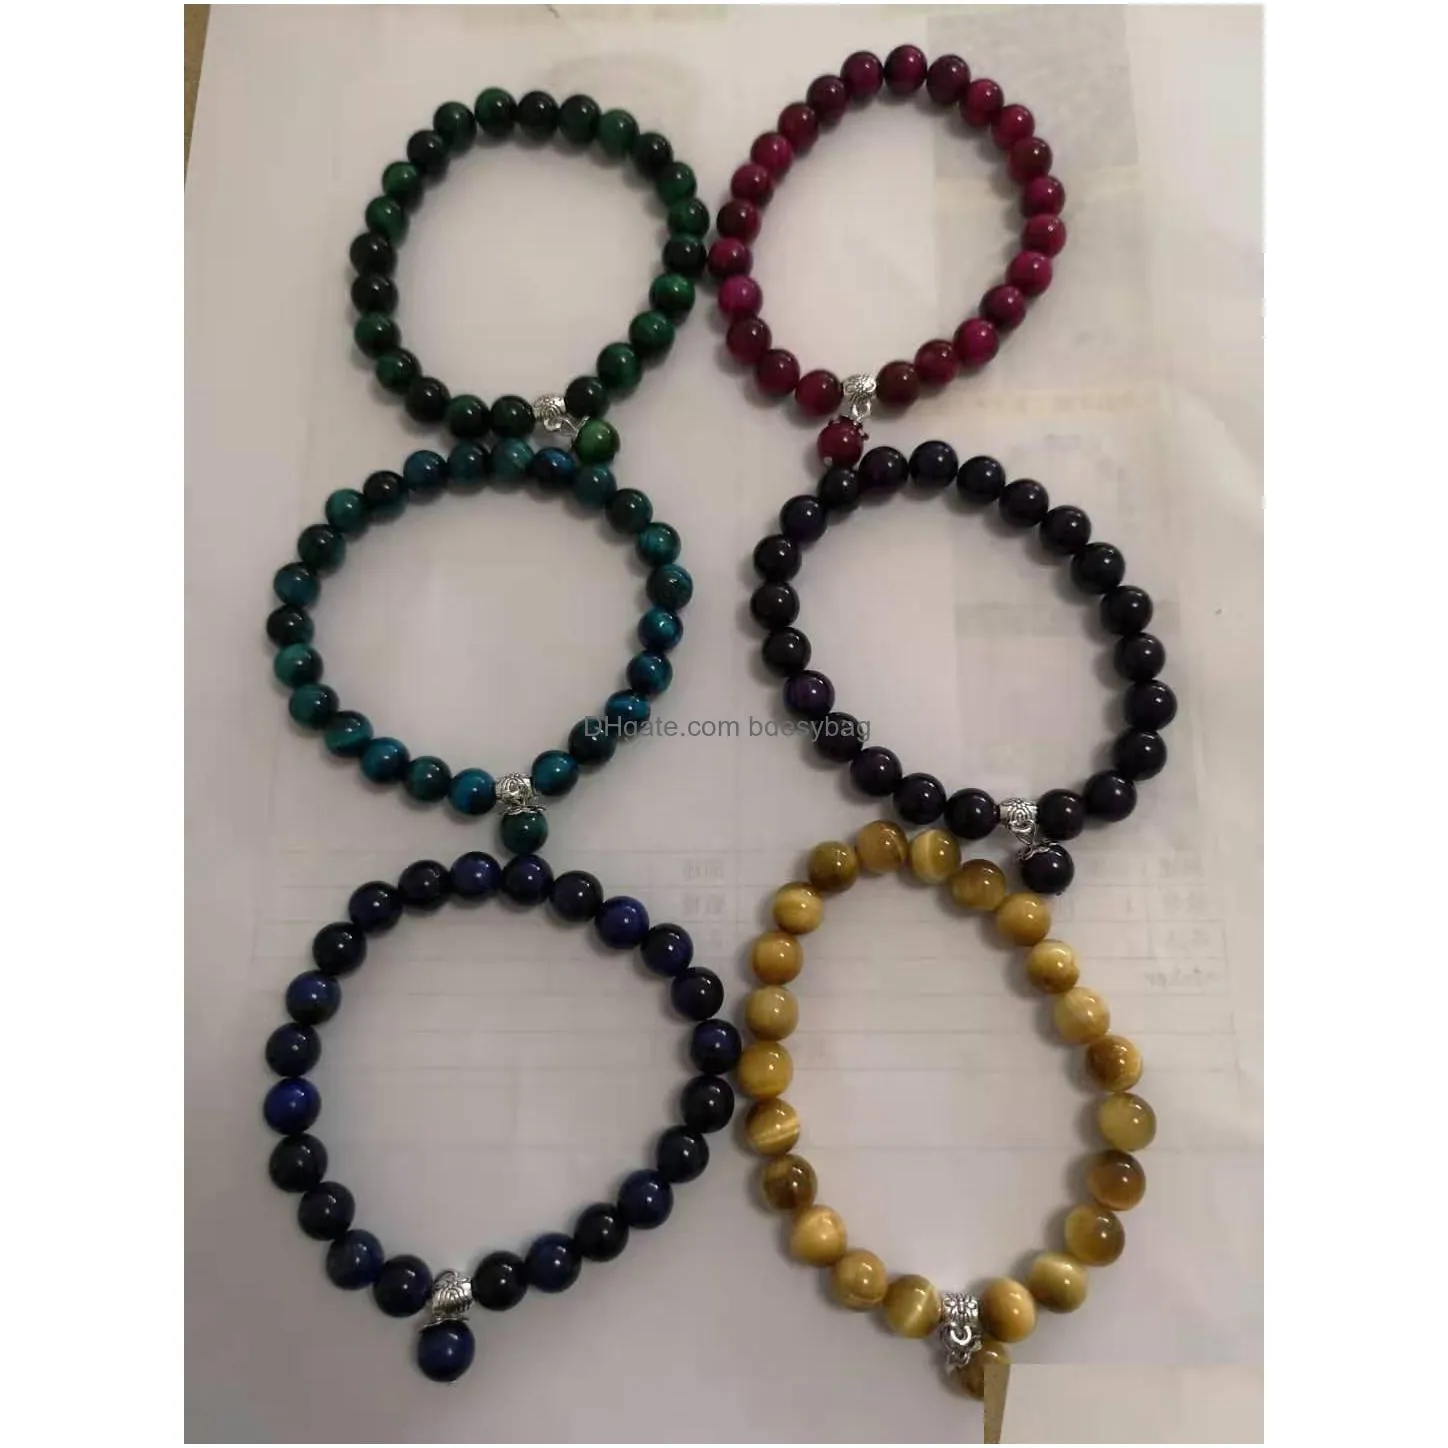 tiger eye gemstone bracelets stretch crystal bracelets 6 colors healing natural stone jewelry bracelet bangle best gift for women